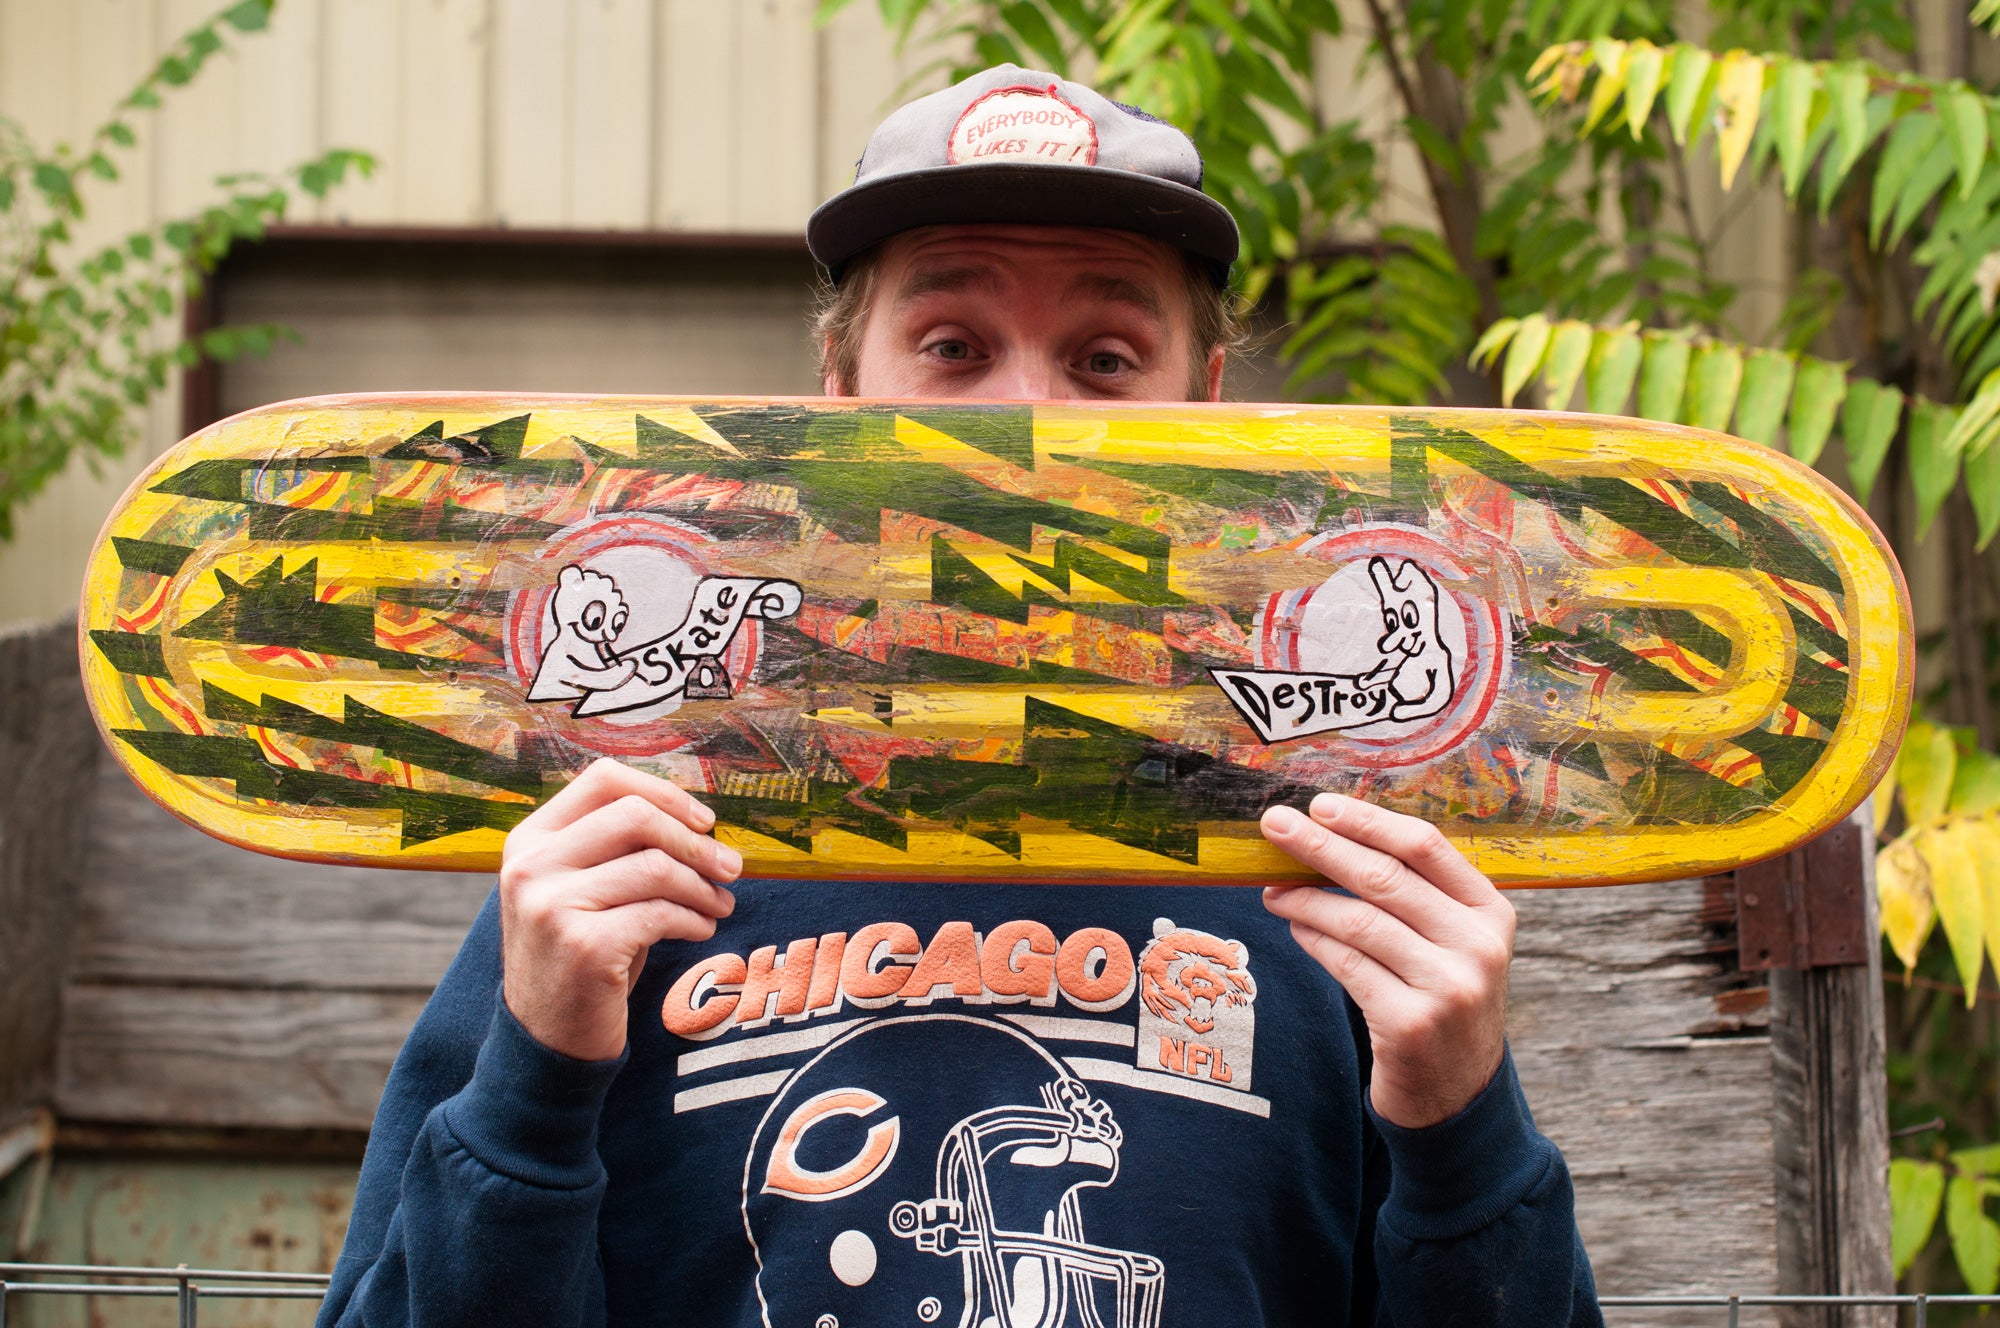 Mason Mcfee interview photo with skateboard